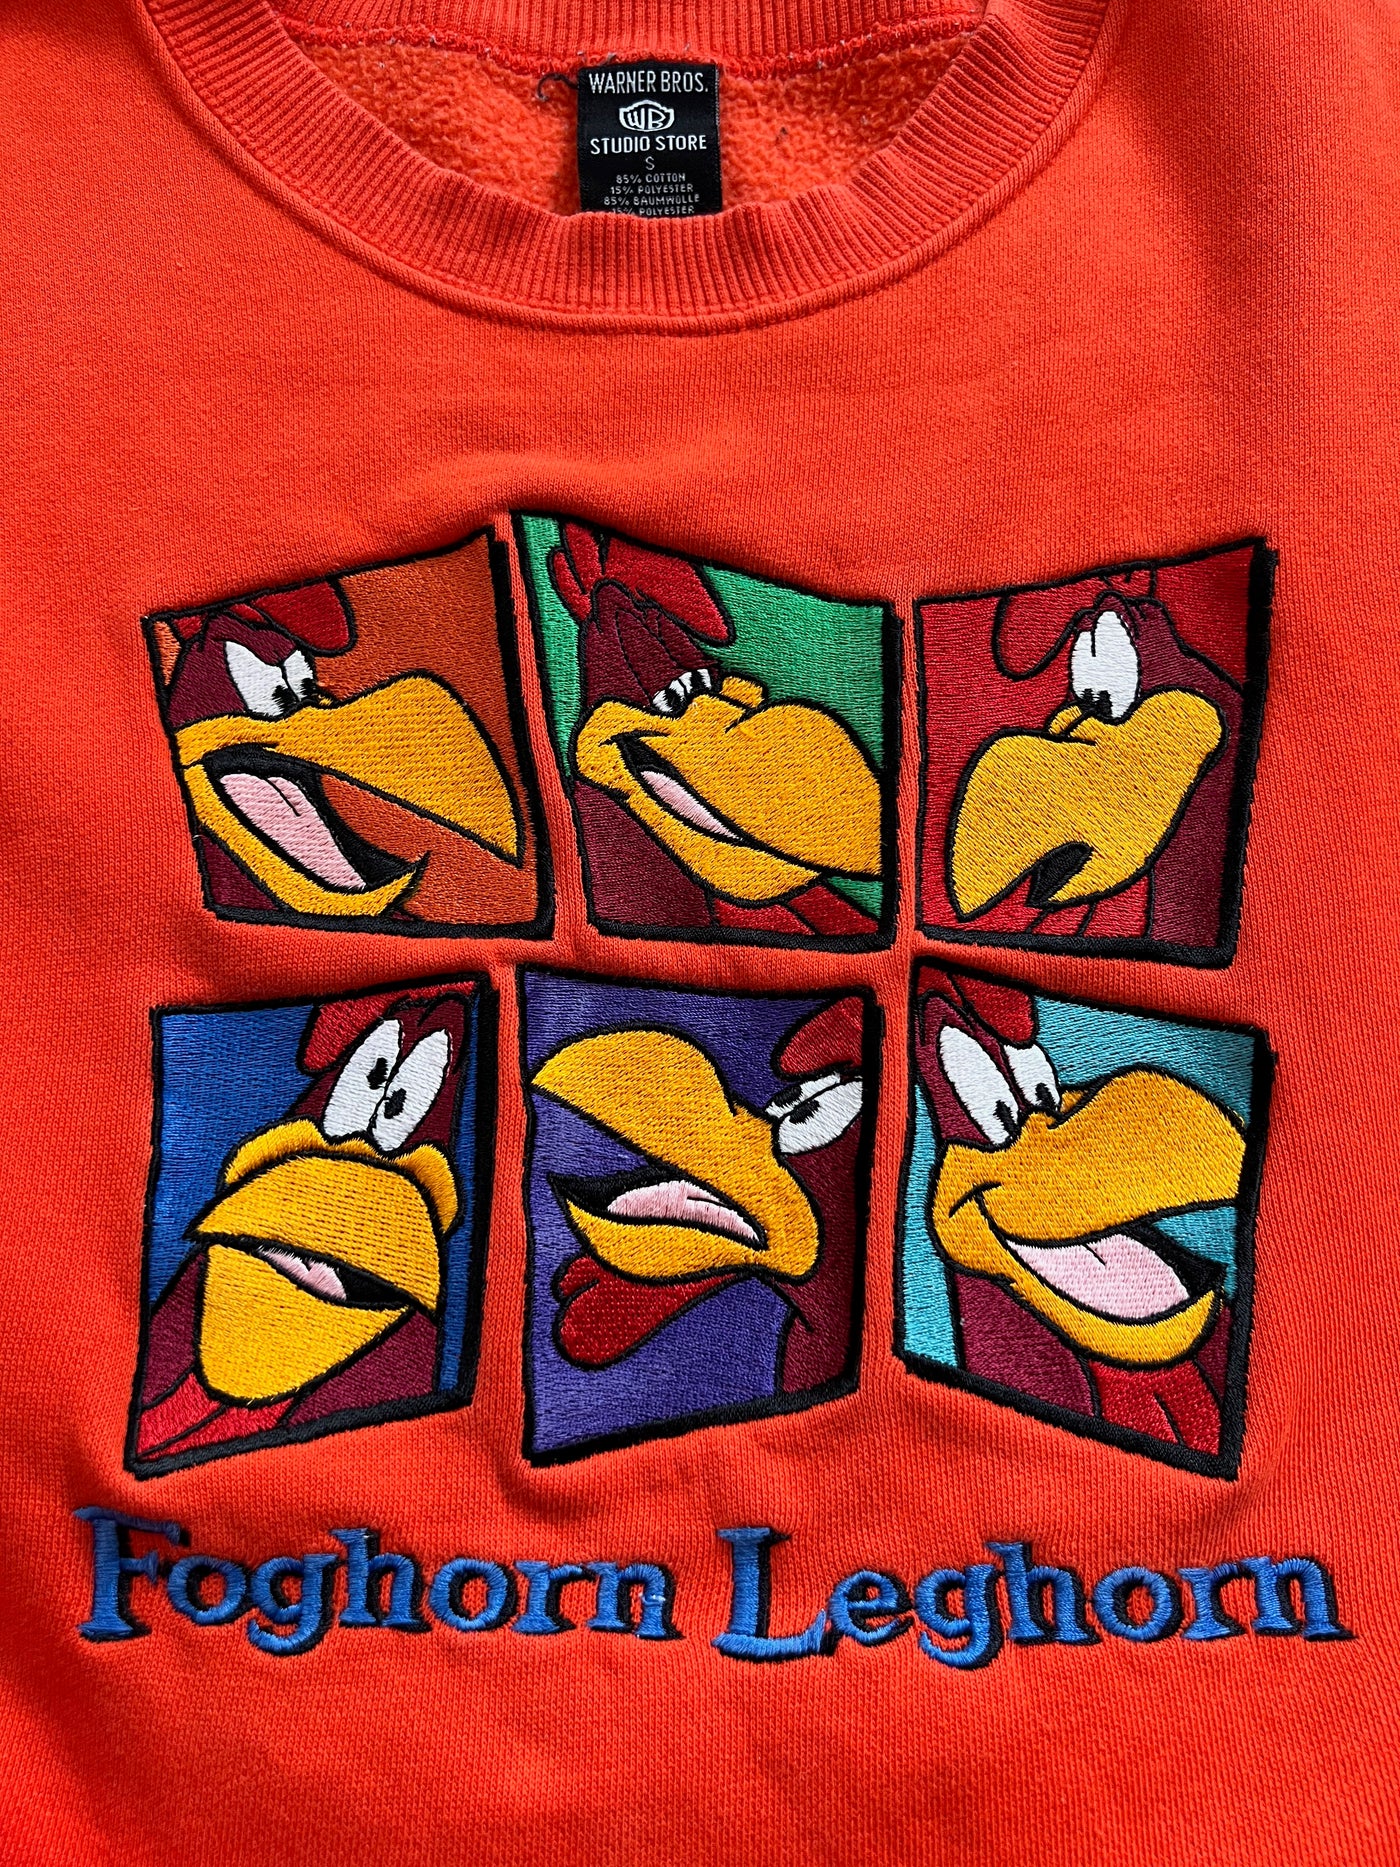 Vintage 90's Warner Brothers Foghorn Leghorn Crewneck Sweatshirt Orange.